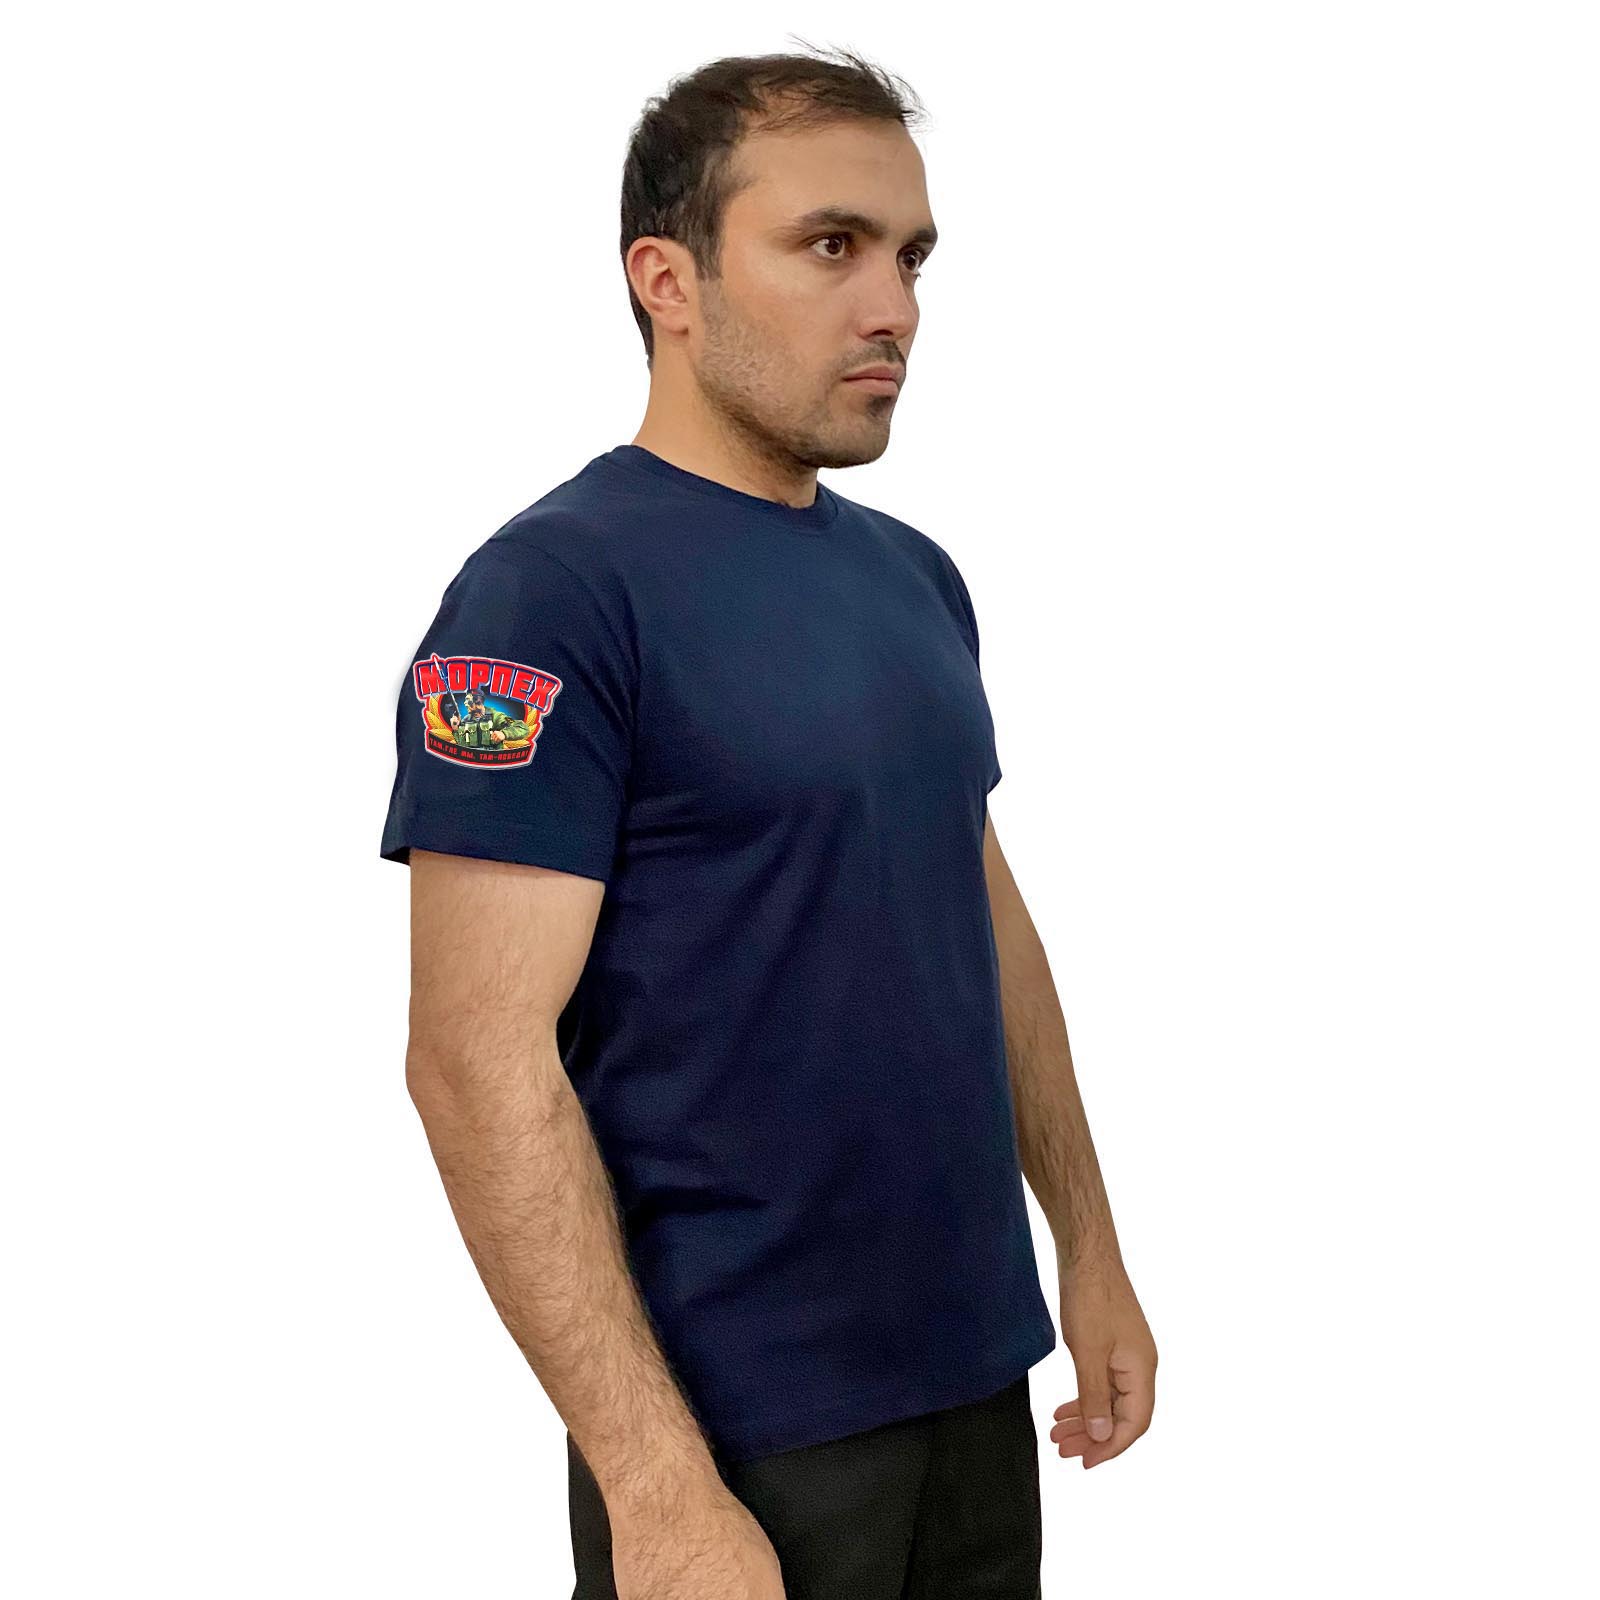 Тёмно-синяя футболка с термотрансфером "Морпех" на рукаве